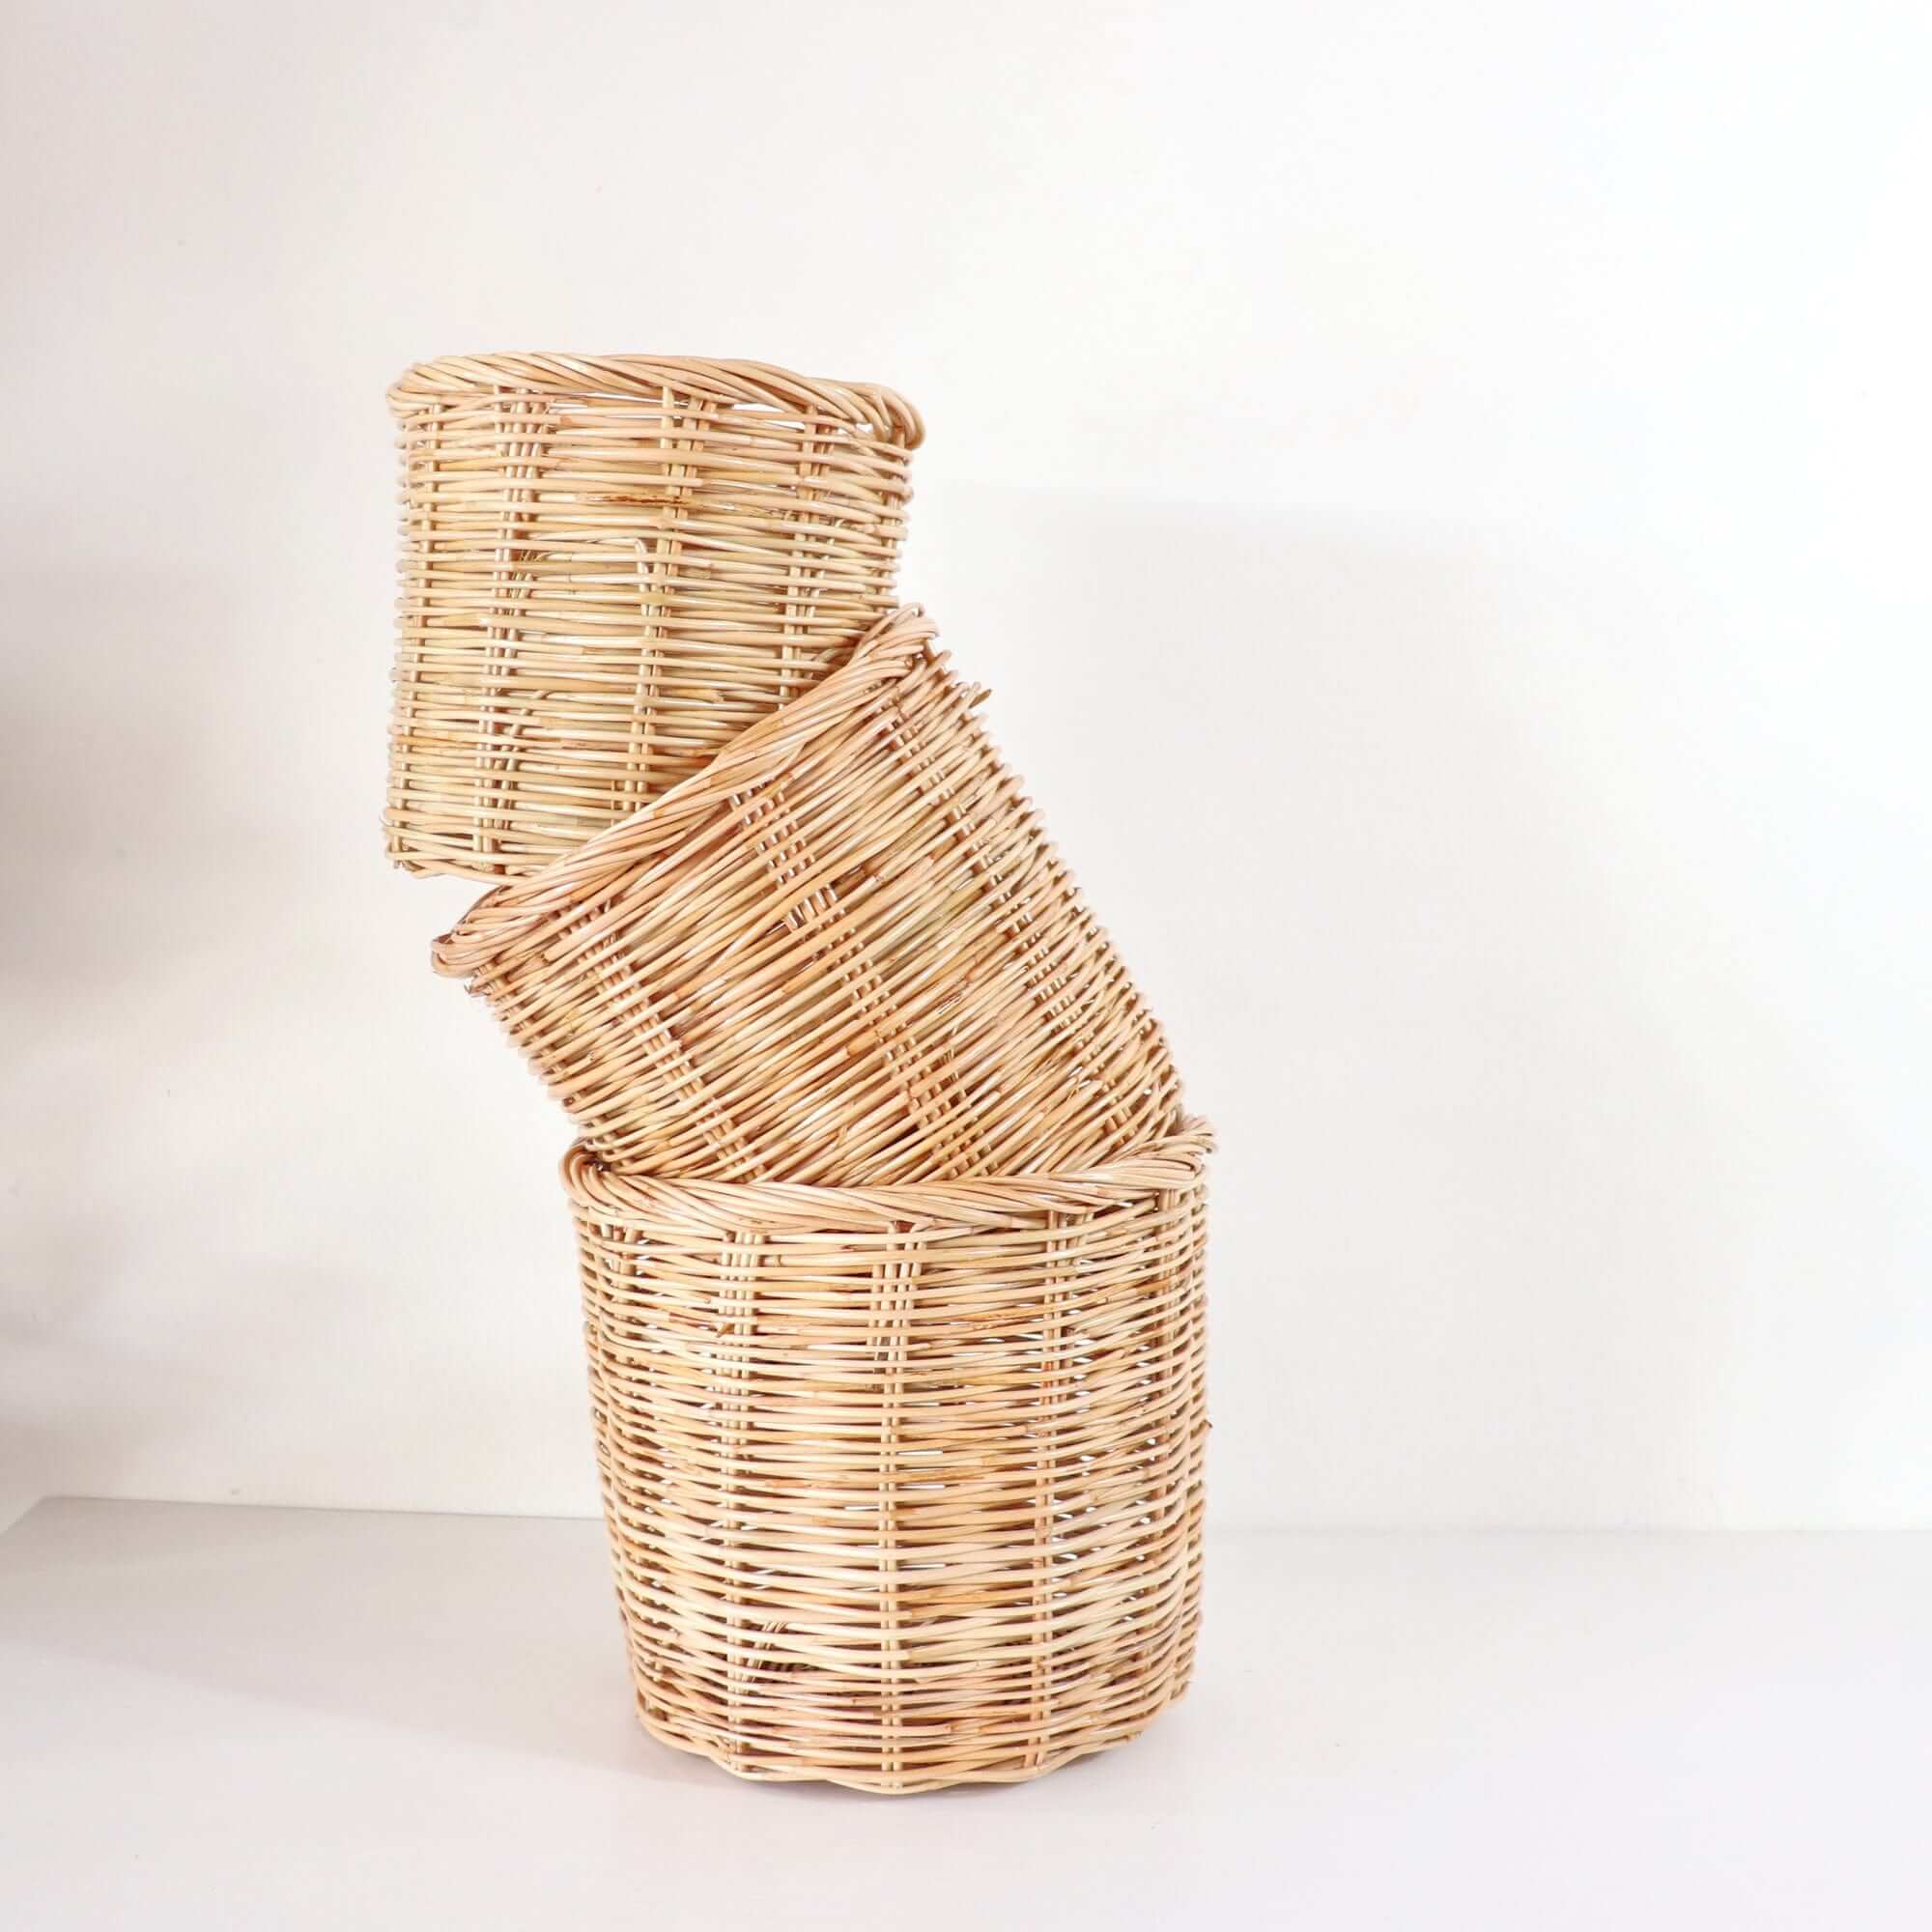 THAIHOME Baskets & Trays Danika - Storage Basket